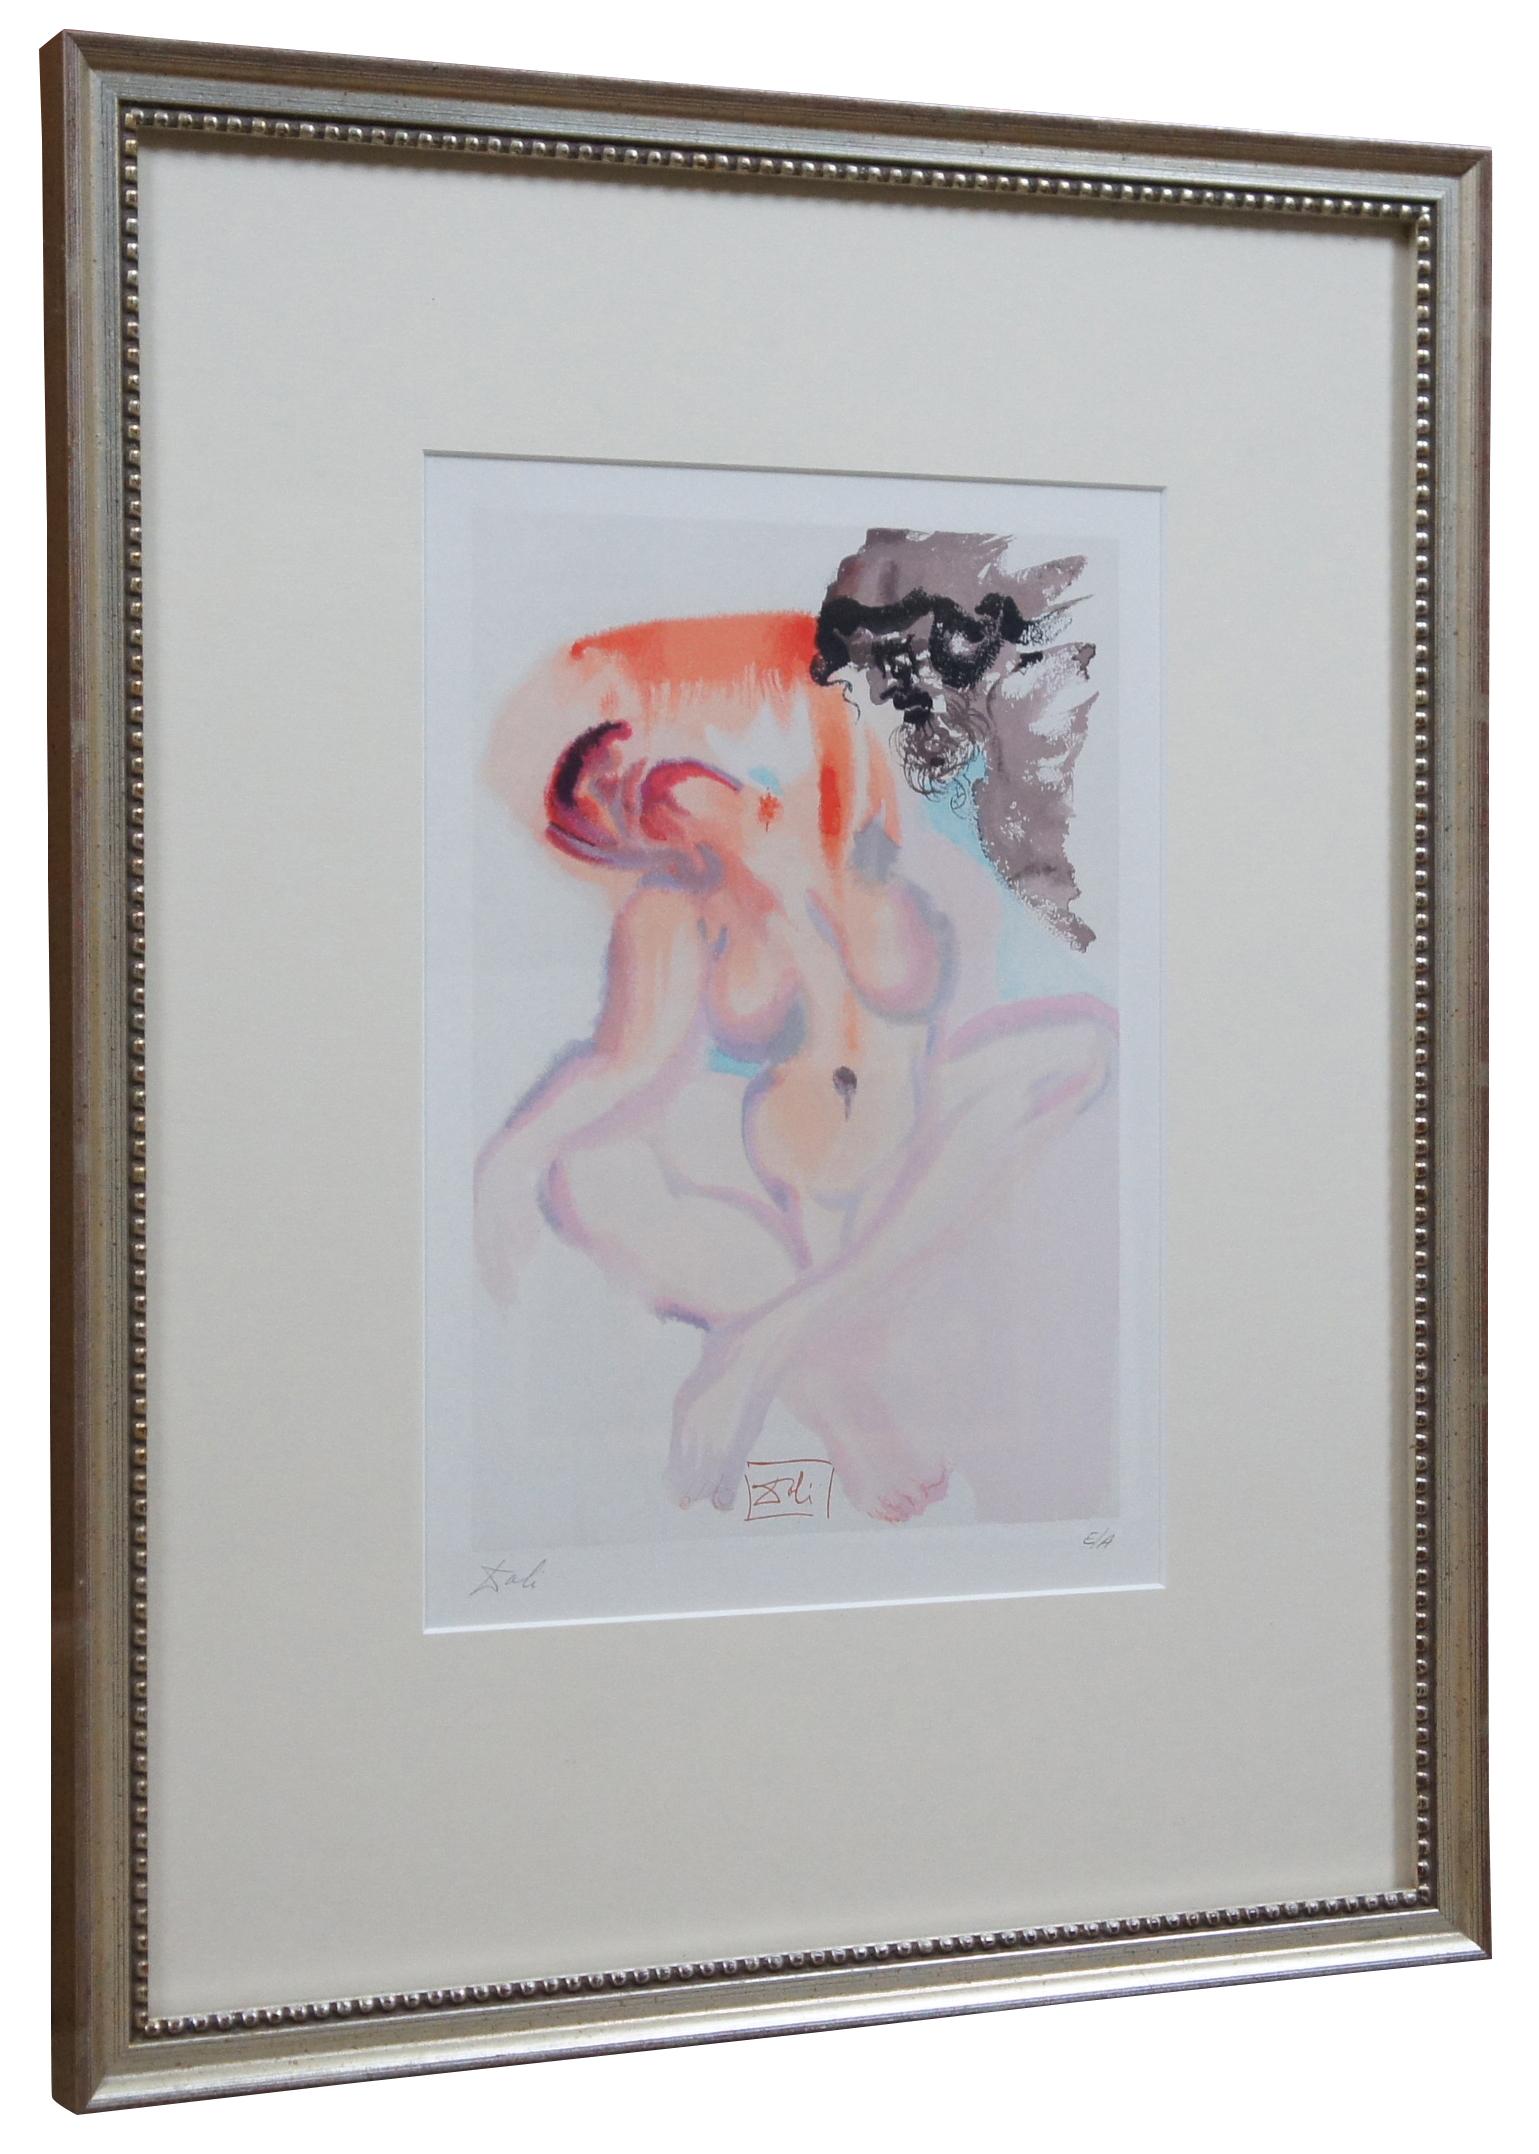 Expressionist Salvador Dali Les Indolents Nude Divine Comedy Woodcut Engraving Purgatory 3 